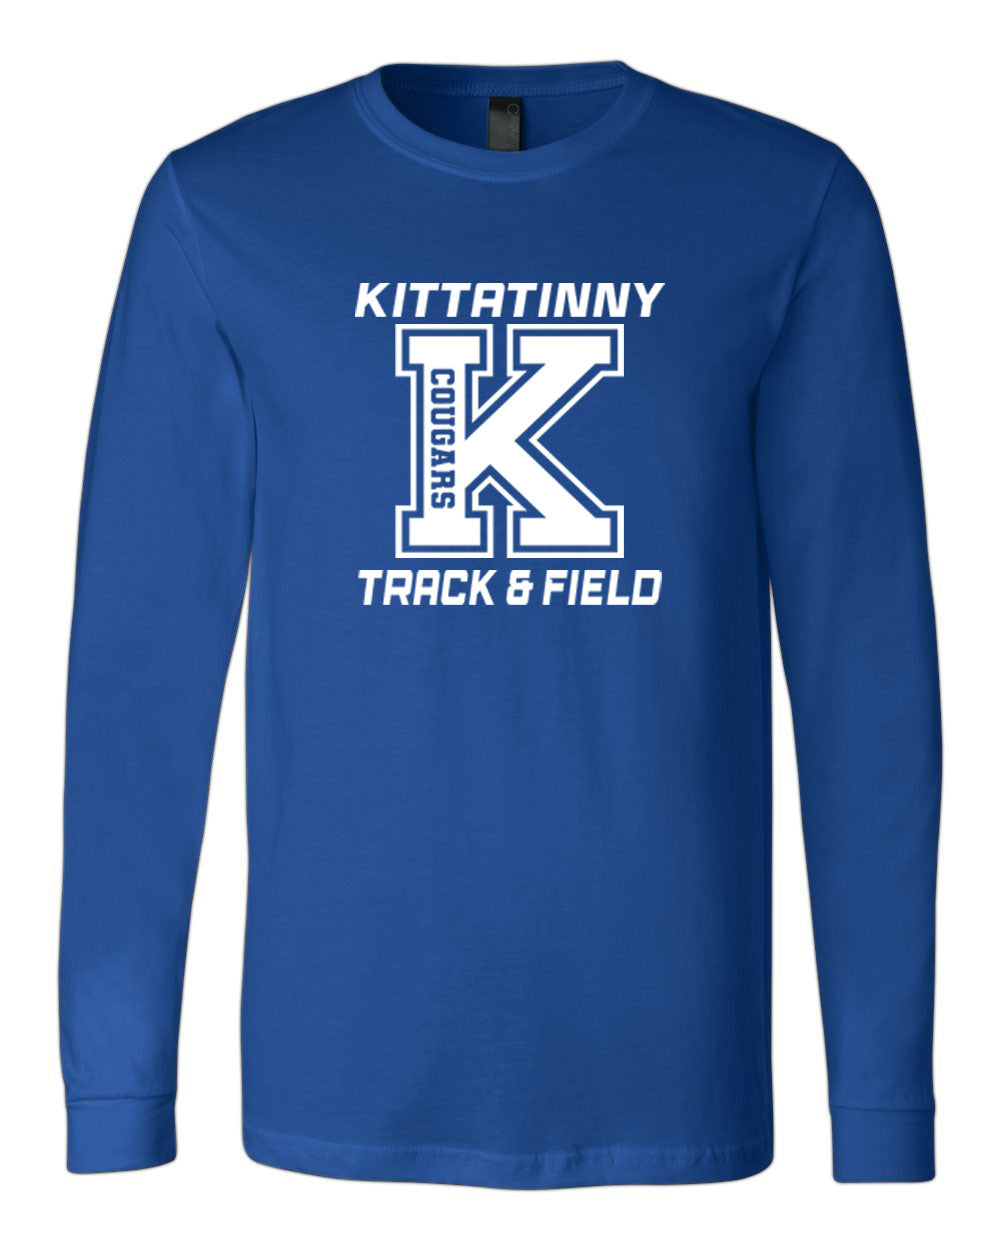 Kittatinny Track Design 3 Long Sleeve Shirt